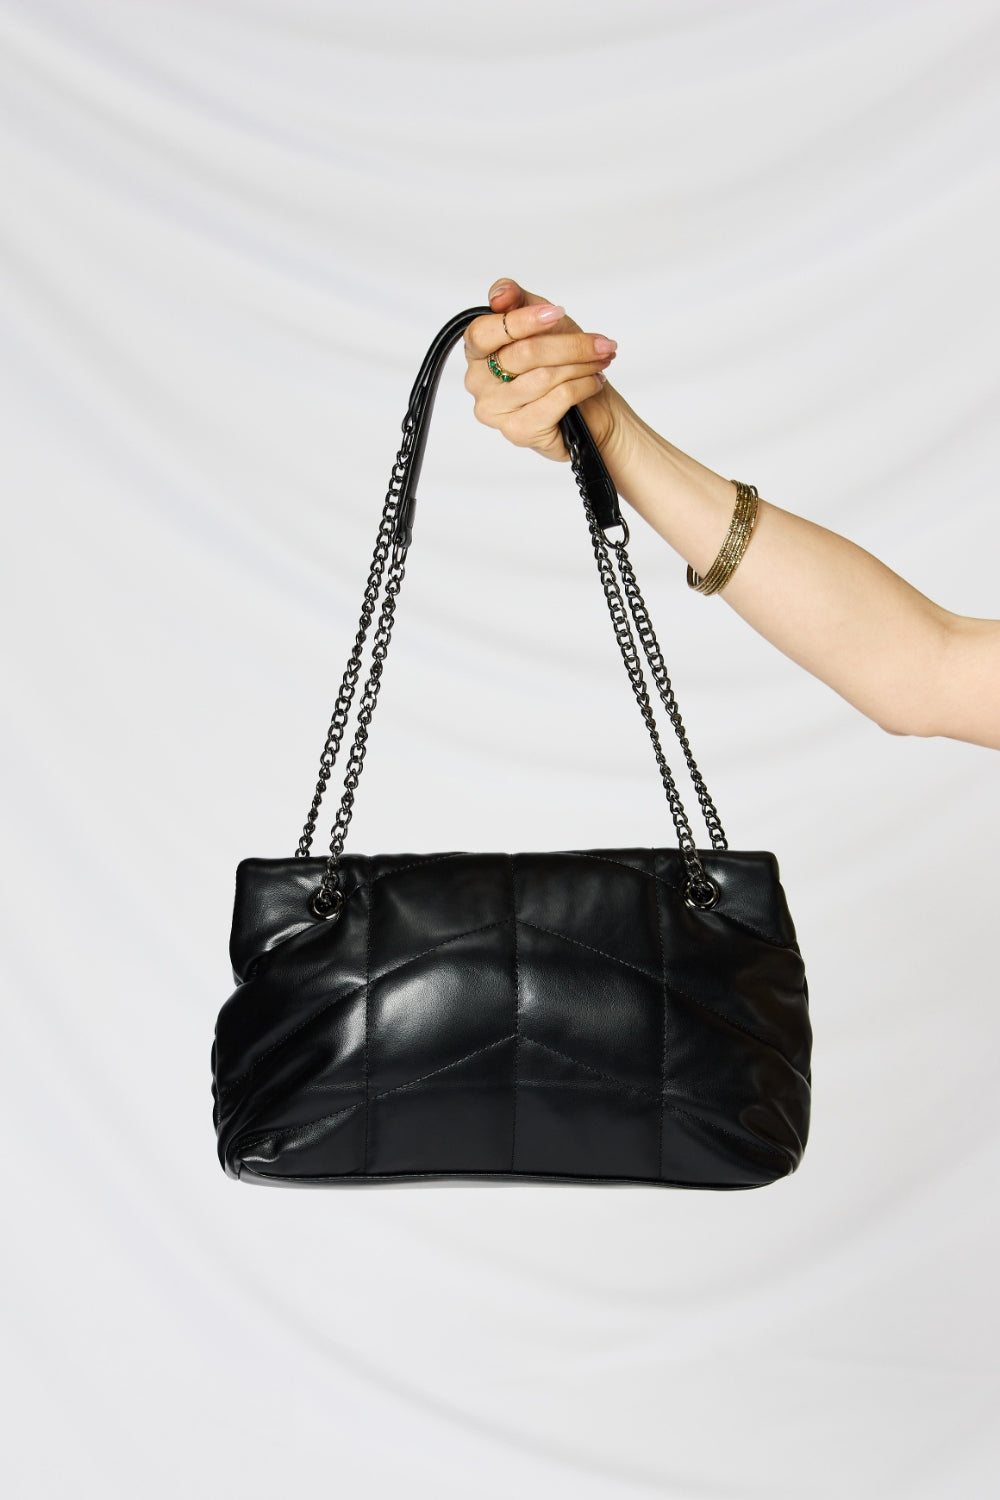 SHOMICO Faux Chain Handbag